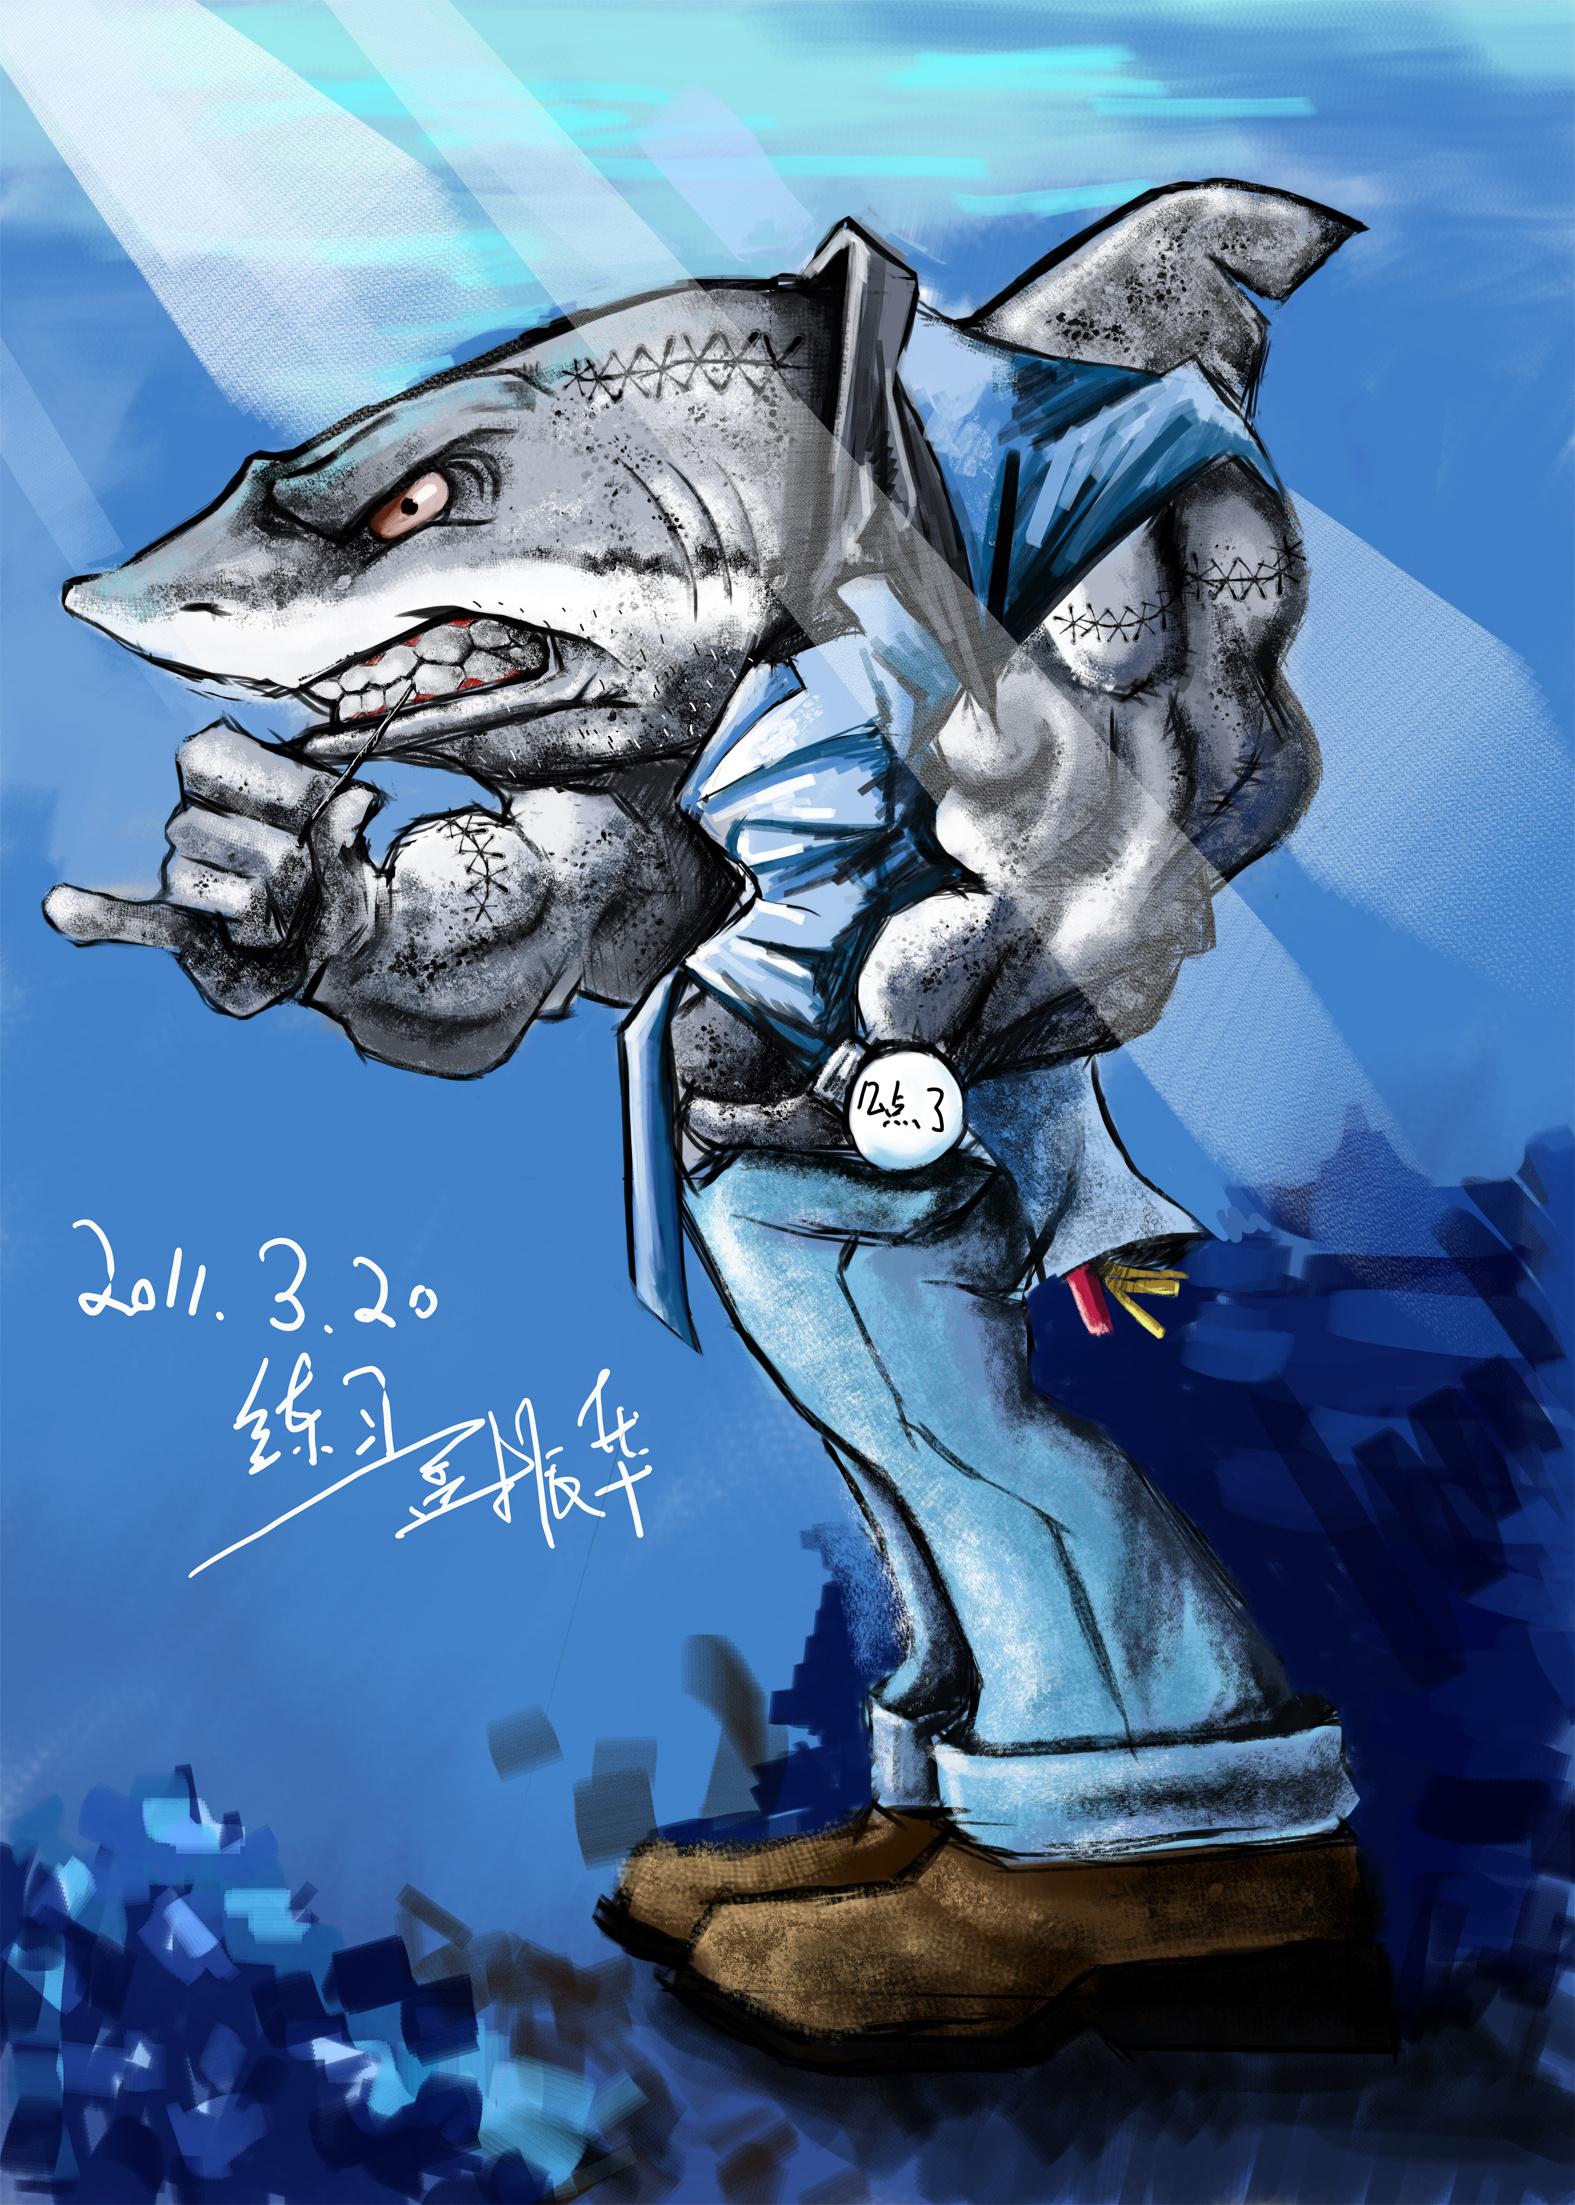 SHARK, the beast——充满科幻感的鲨鱼形象设计！ - 普象网